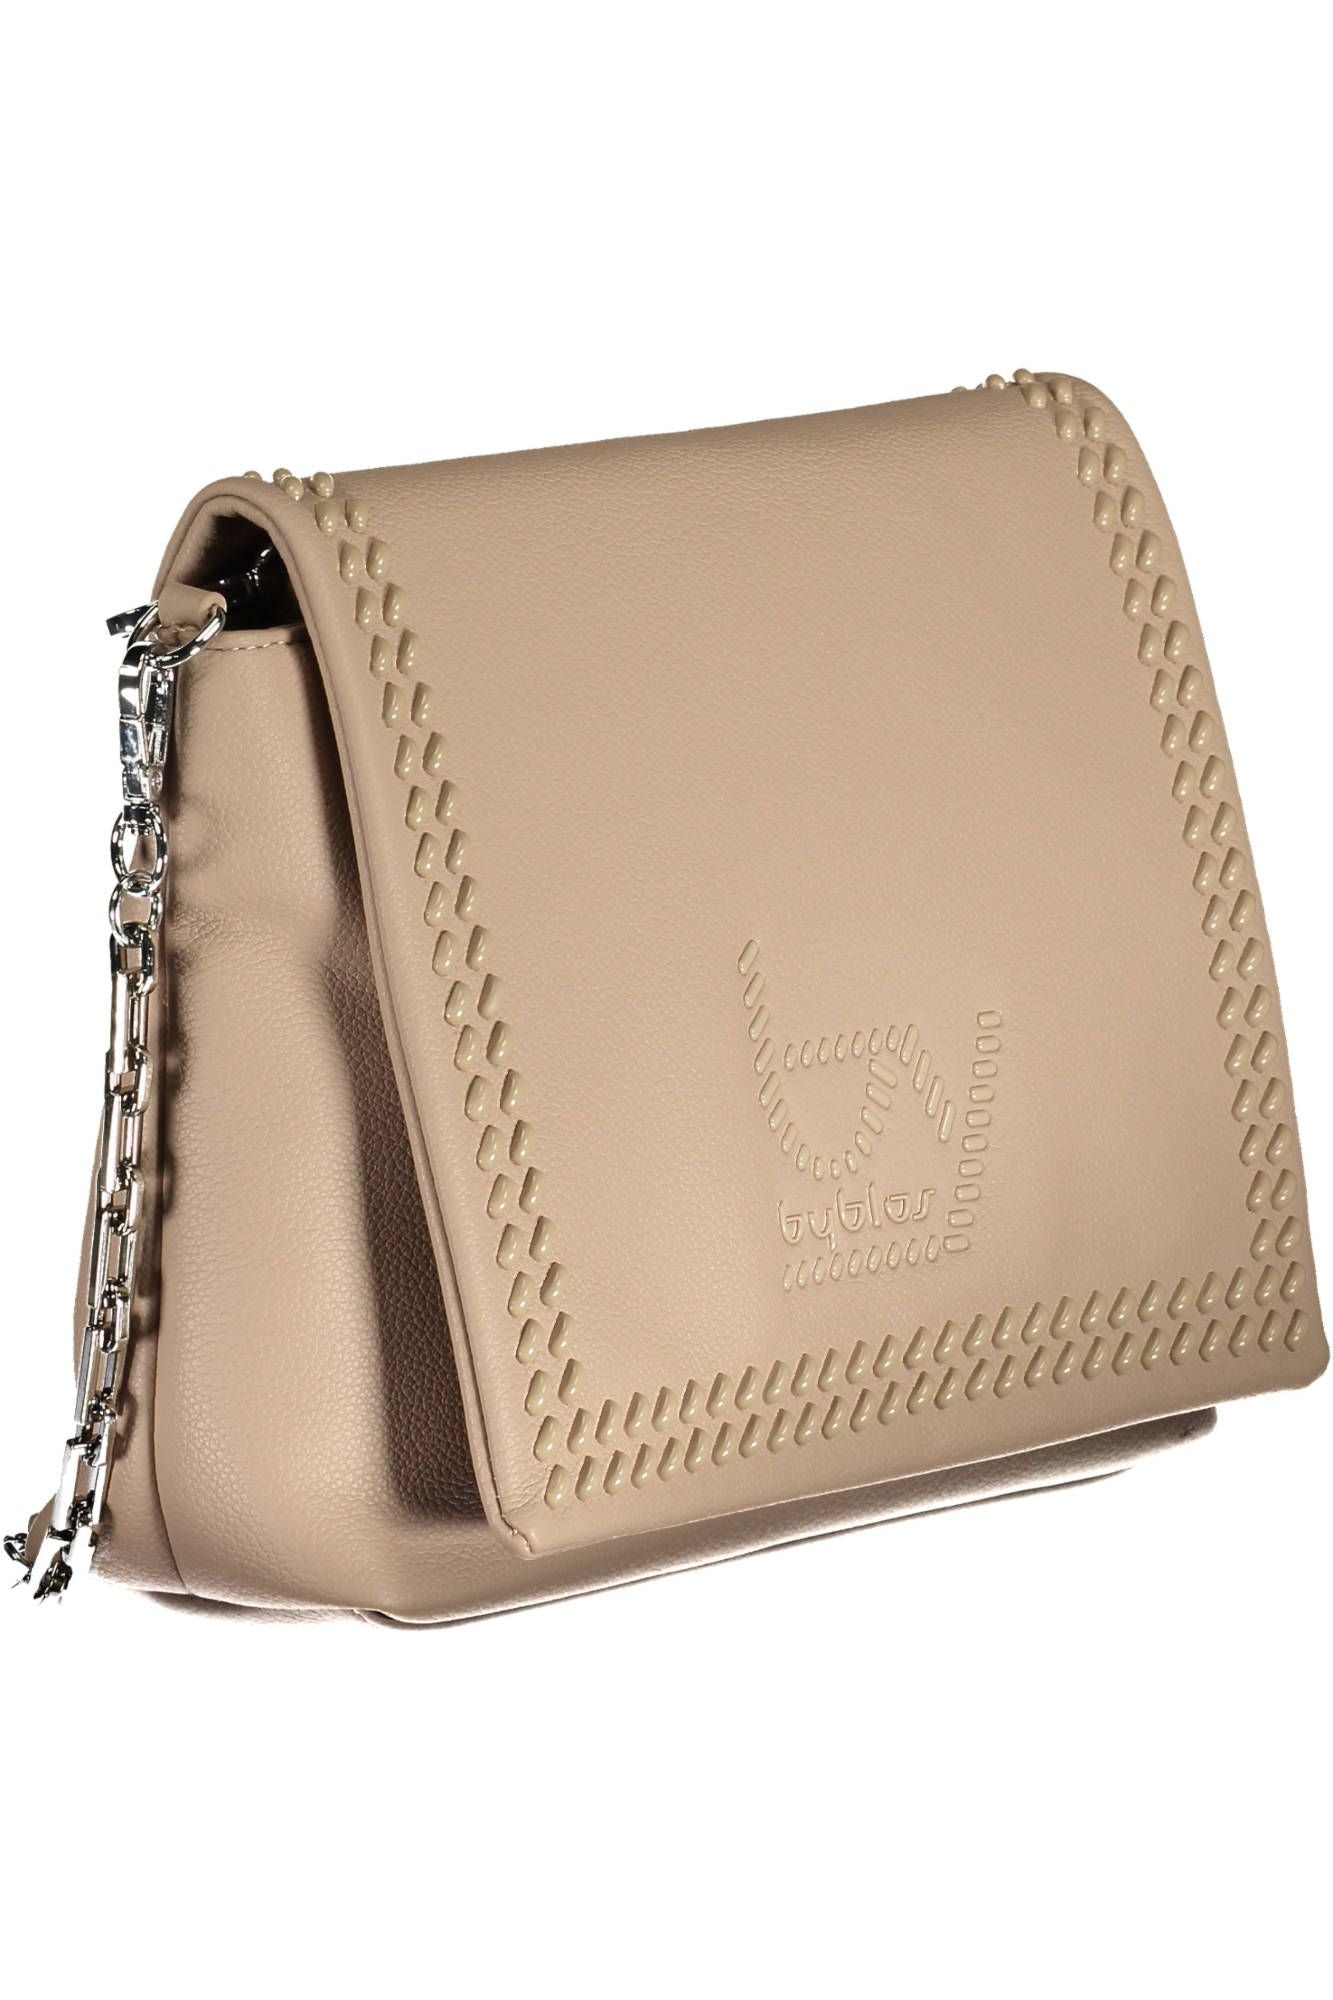 Beige Chain-Handle Shoulder Bag with Contrasting Details